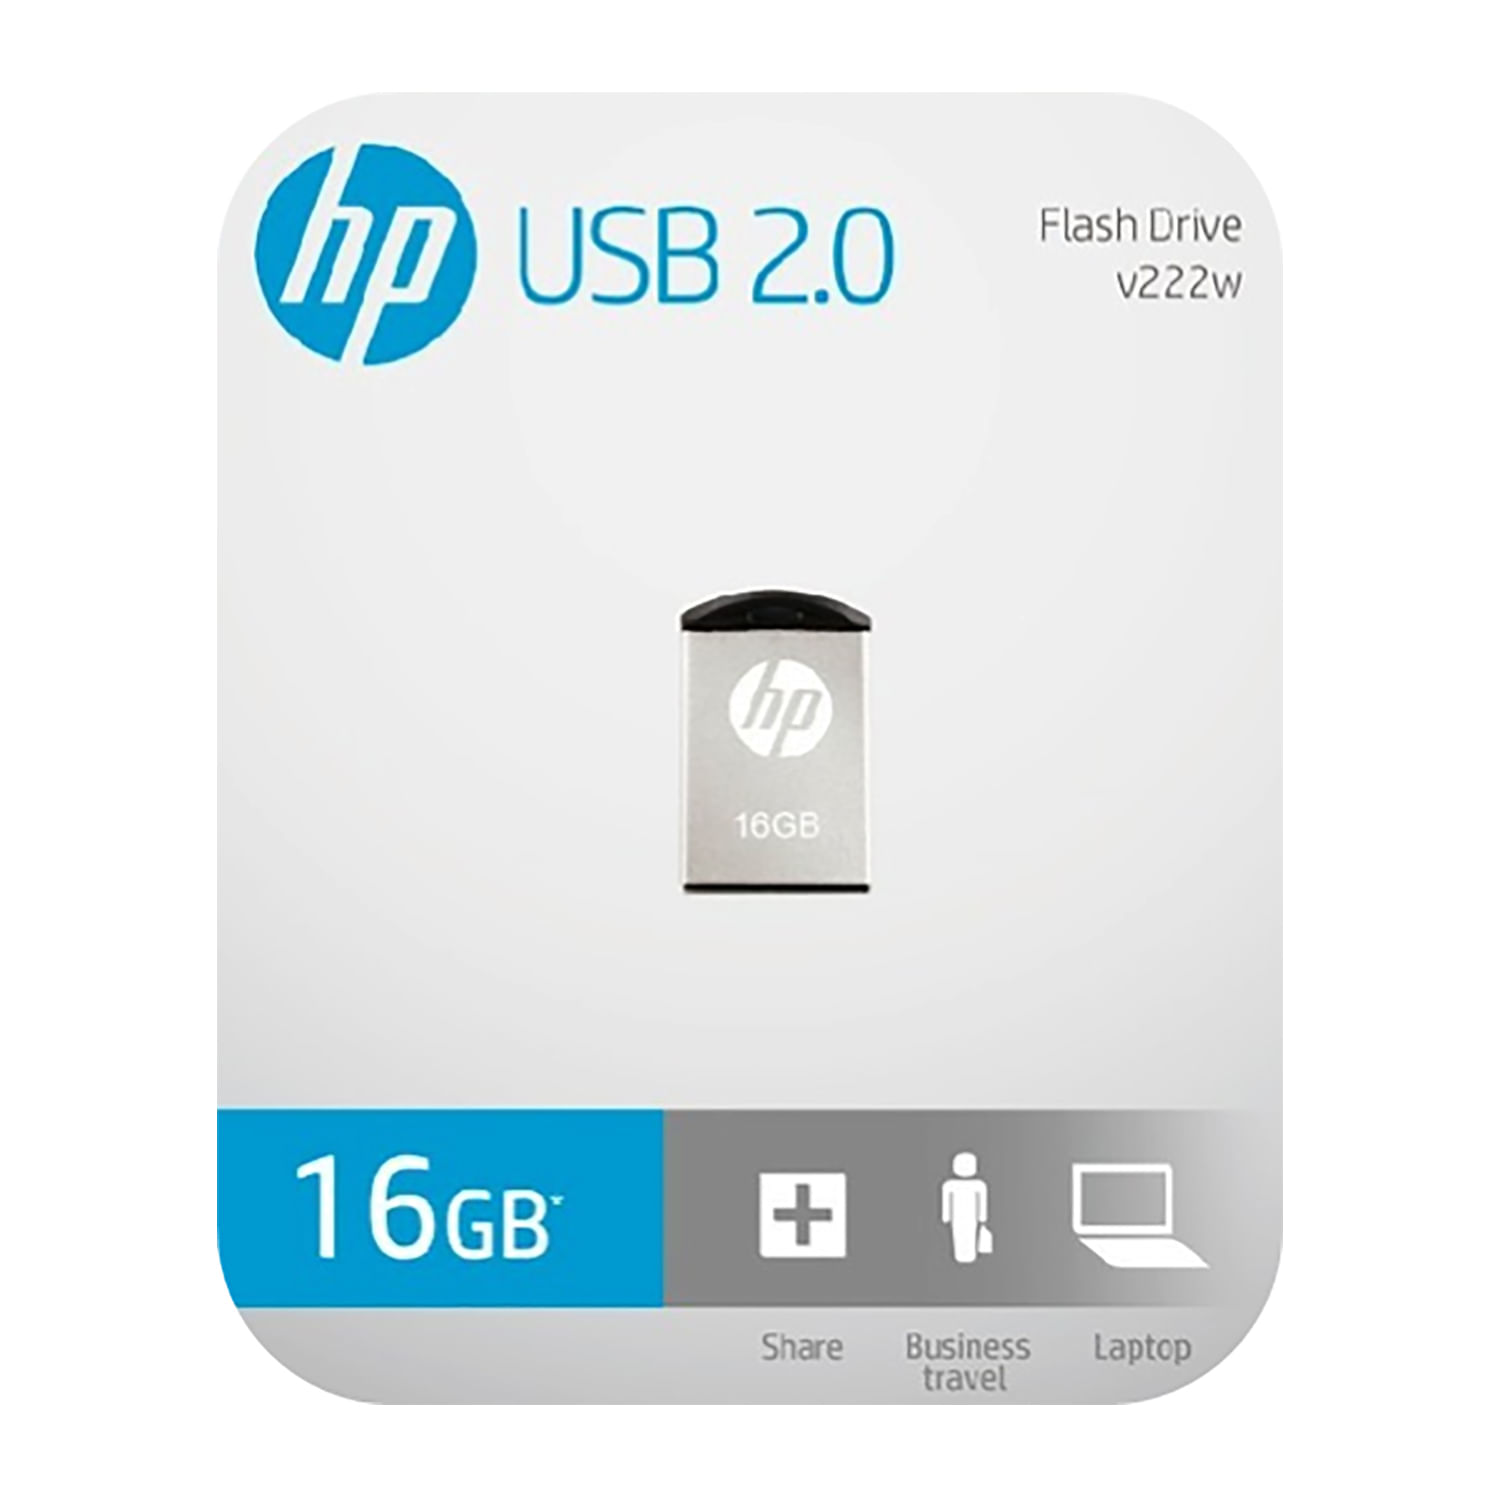 Memoria USB HP Flash Drive V222w 16GB Metal